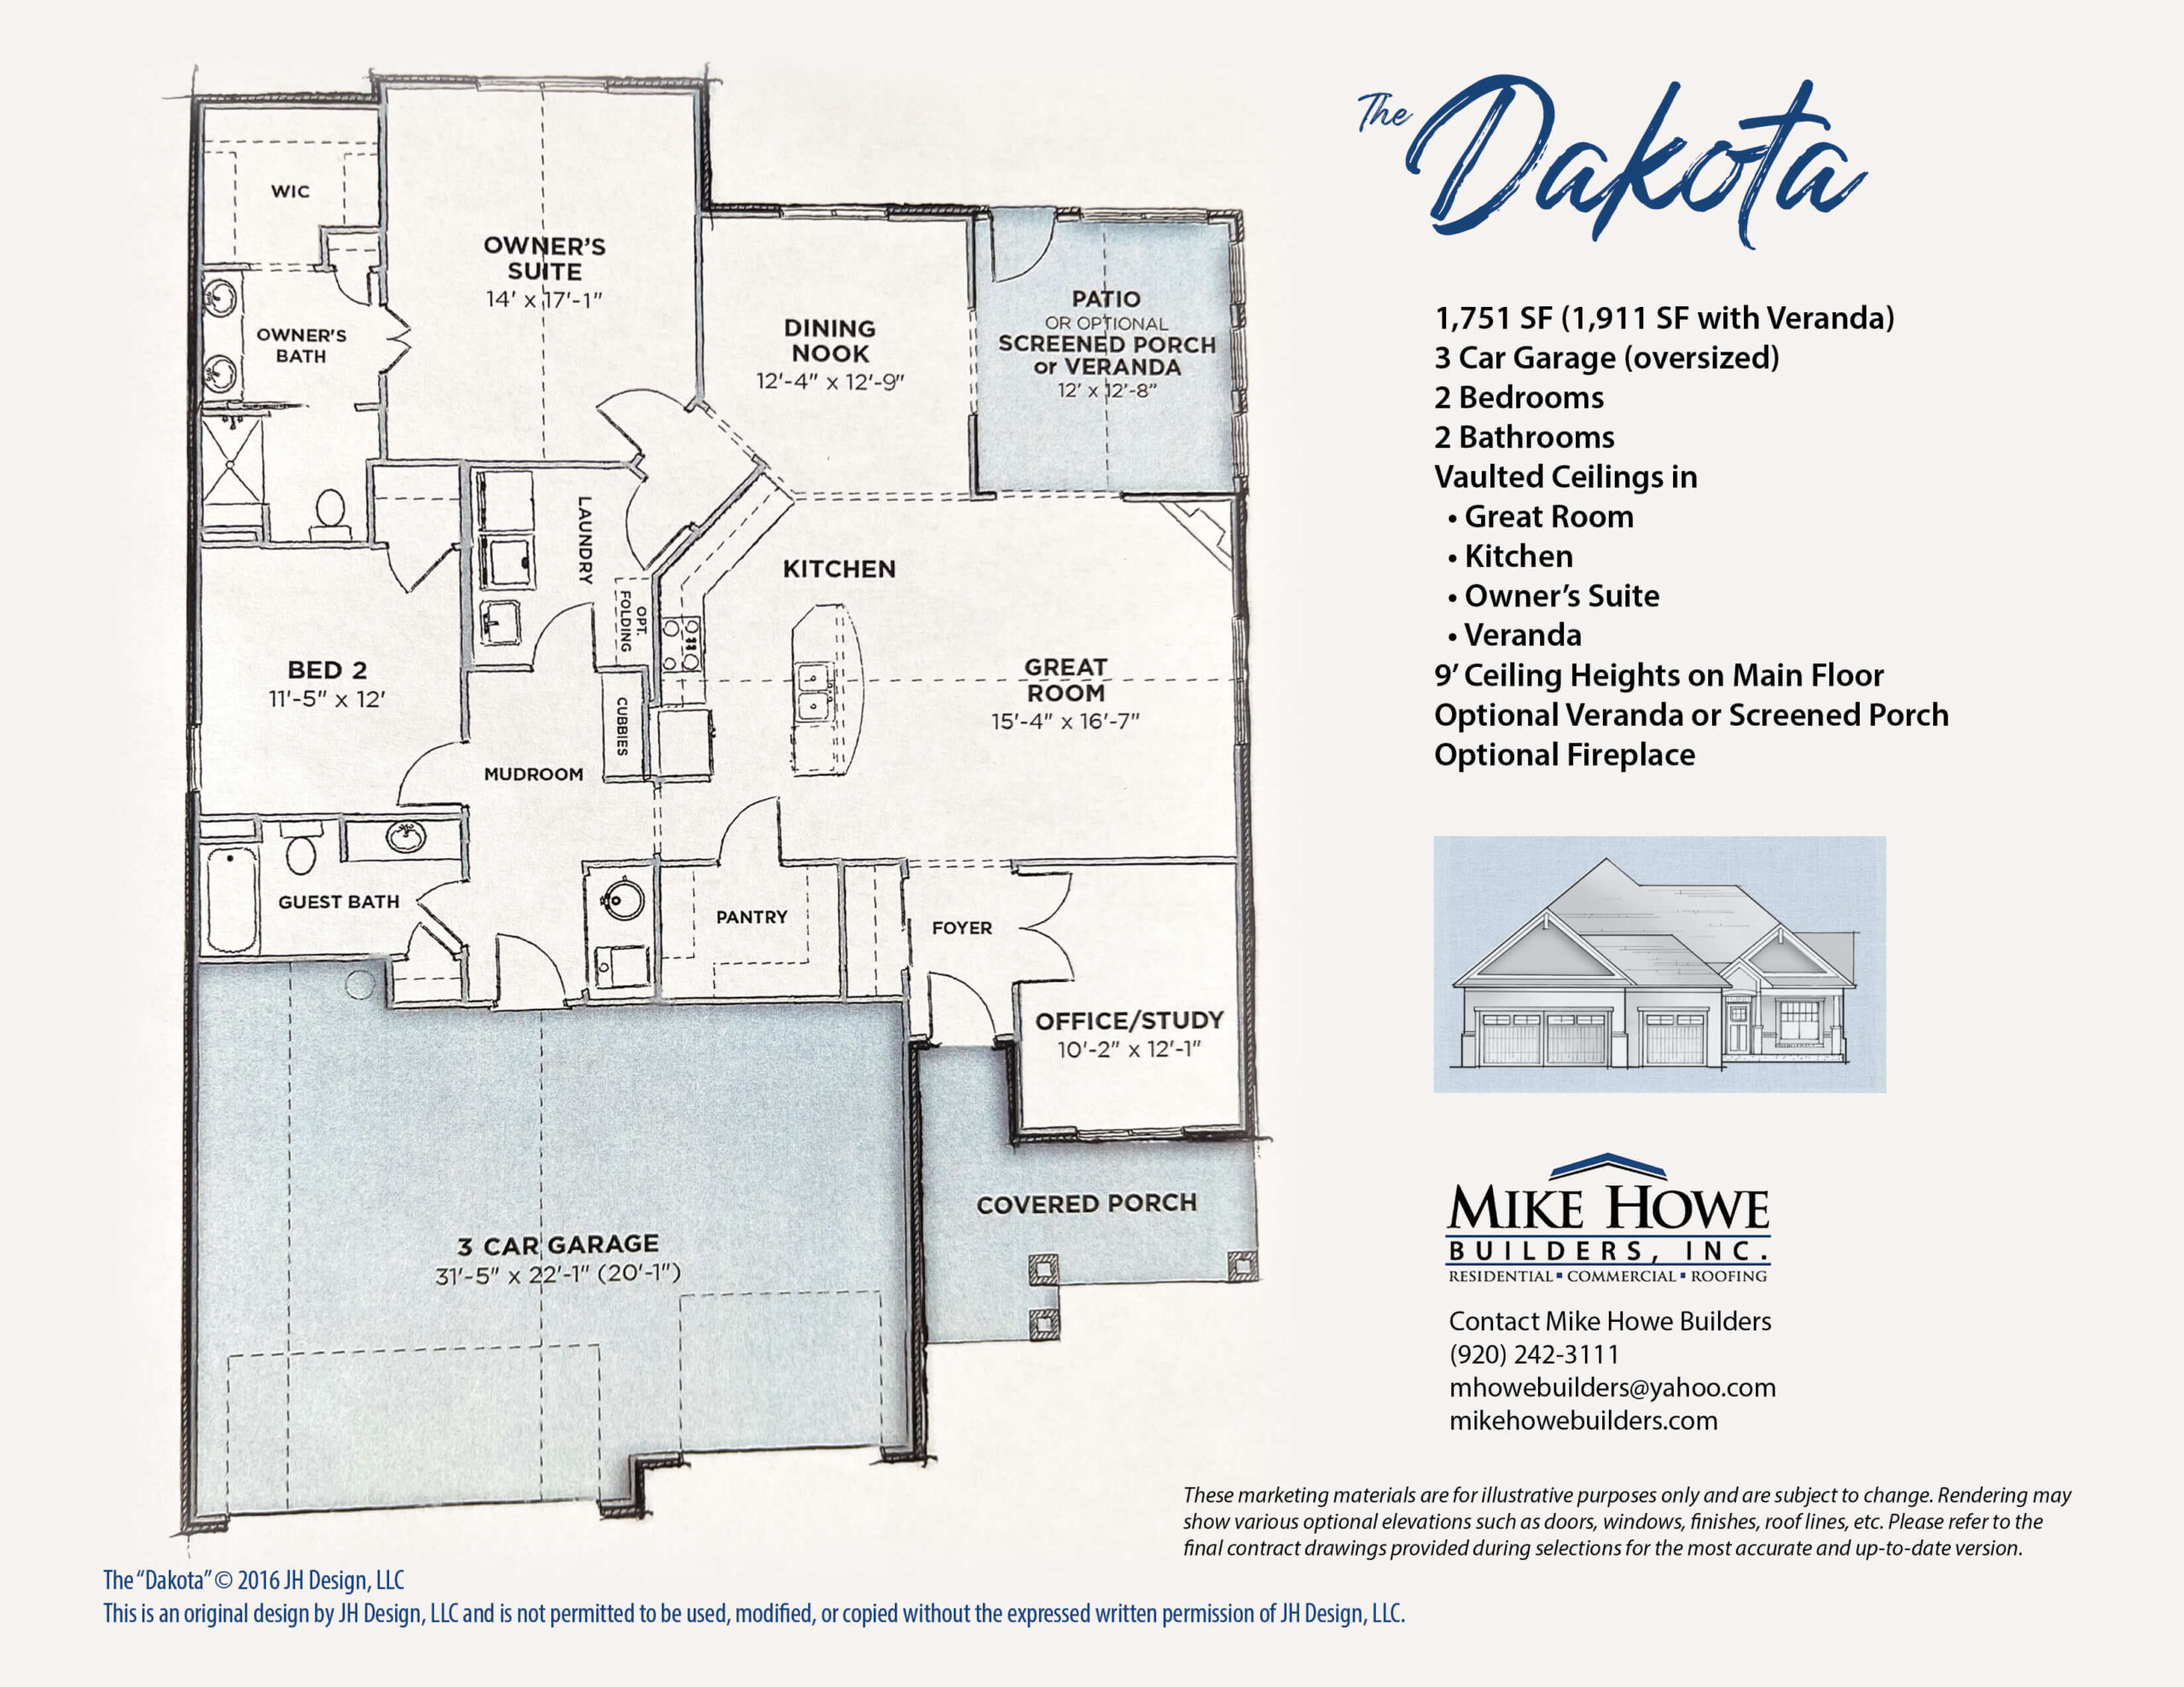 The Dakota Floor Plan and Detail